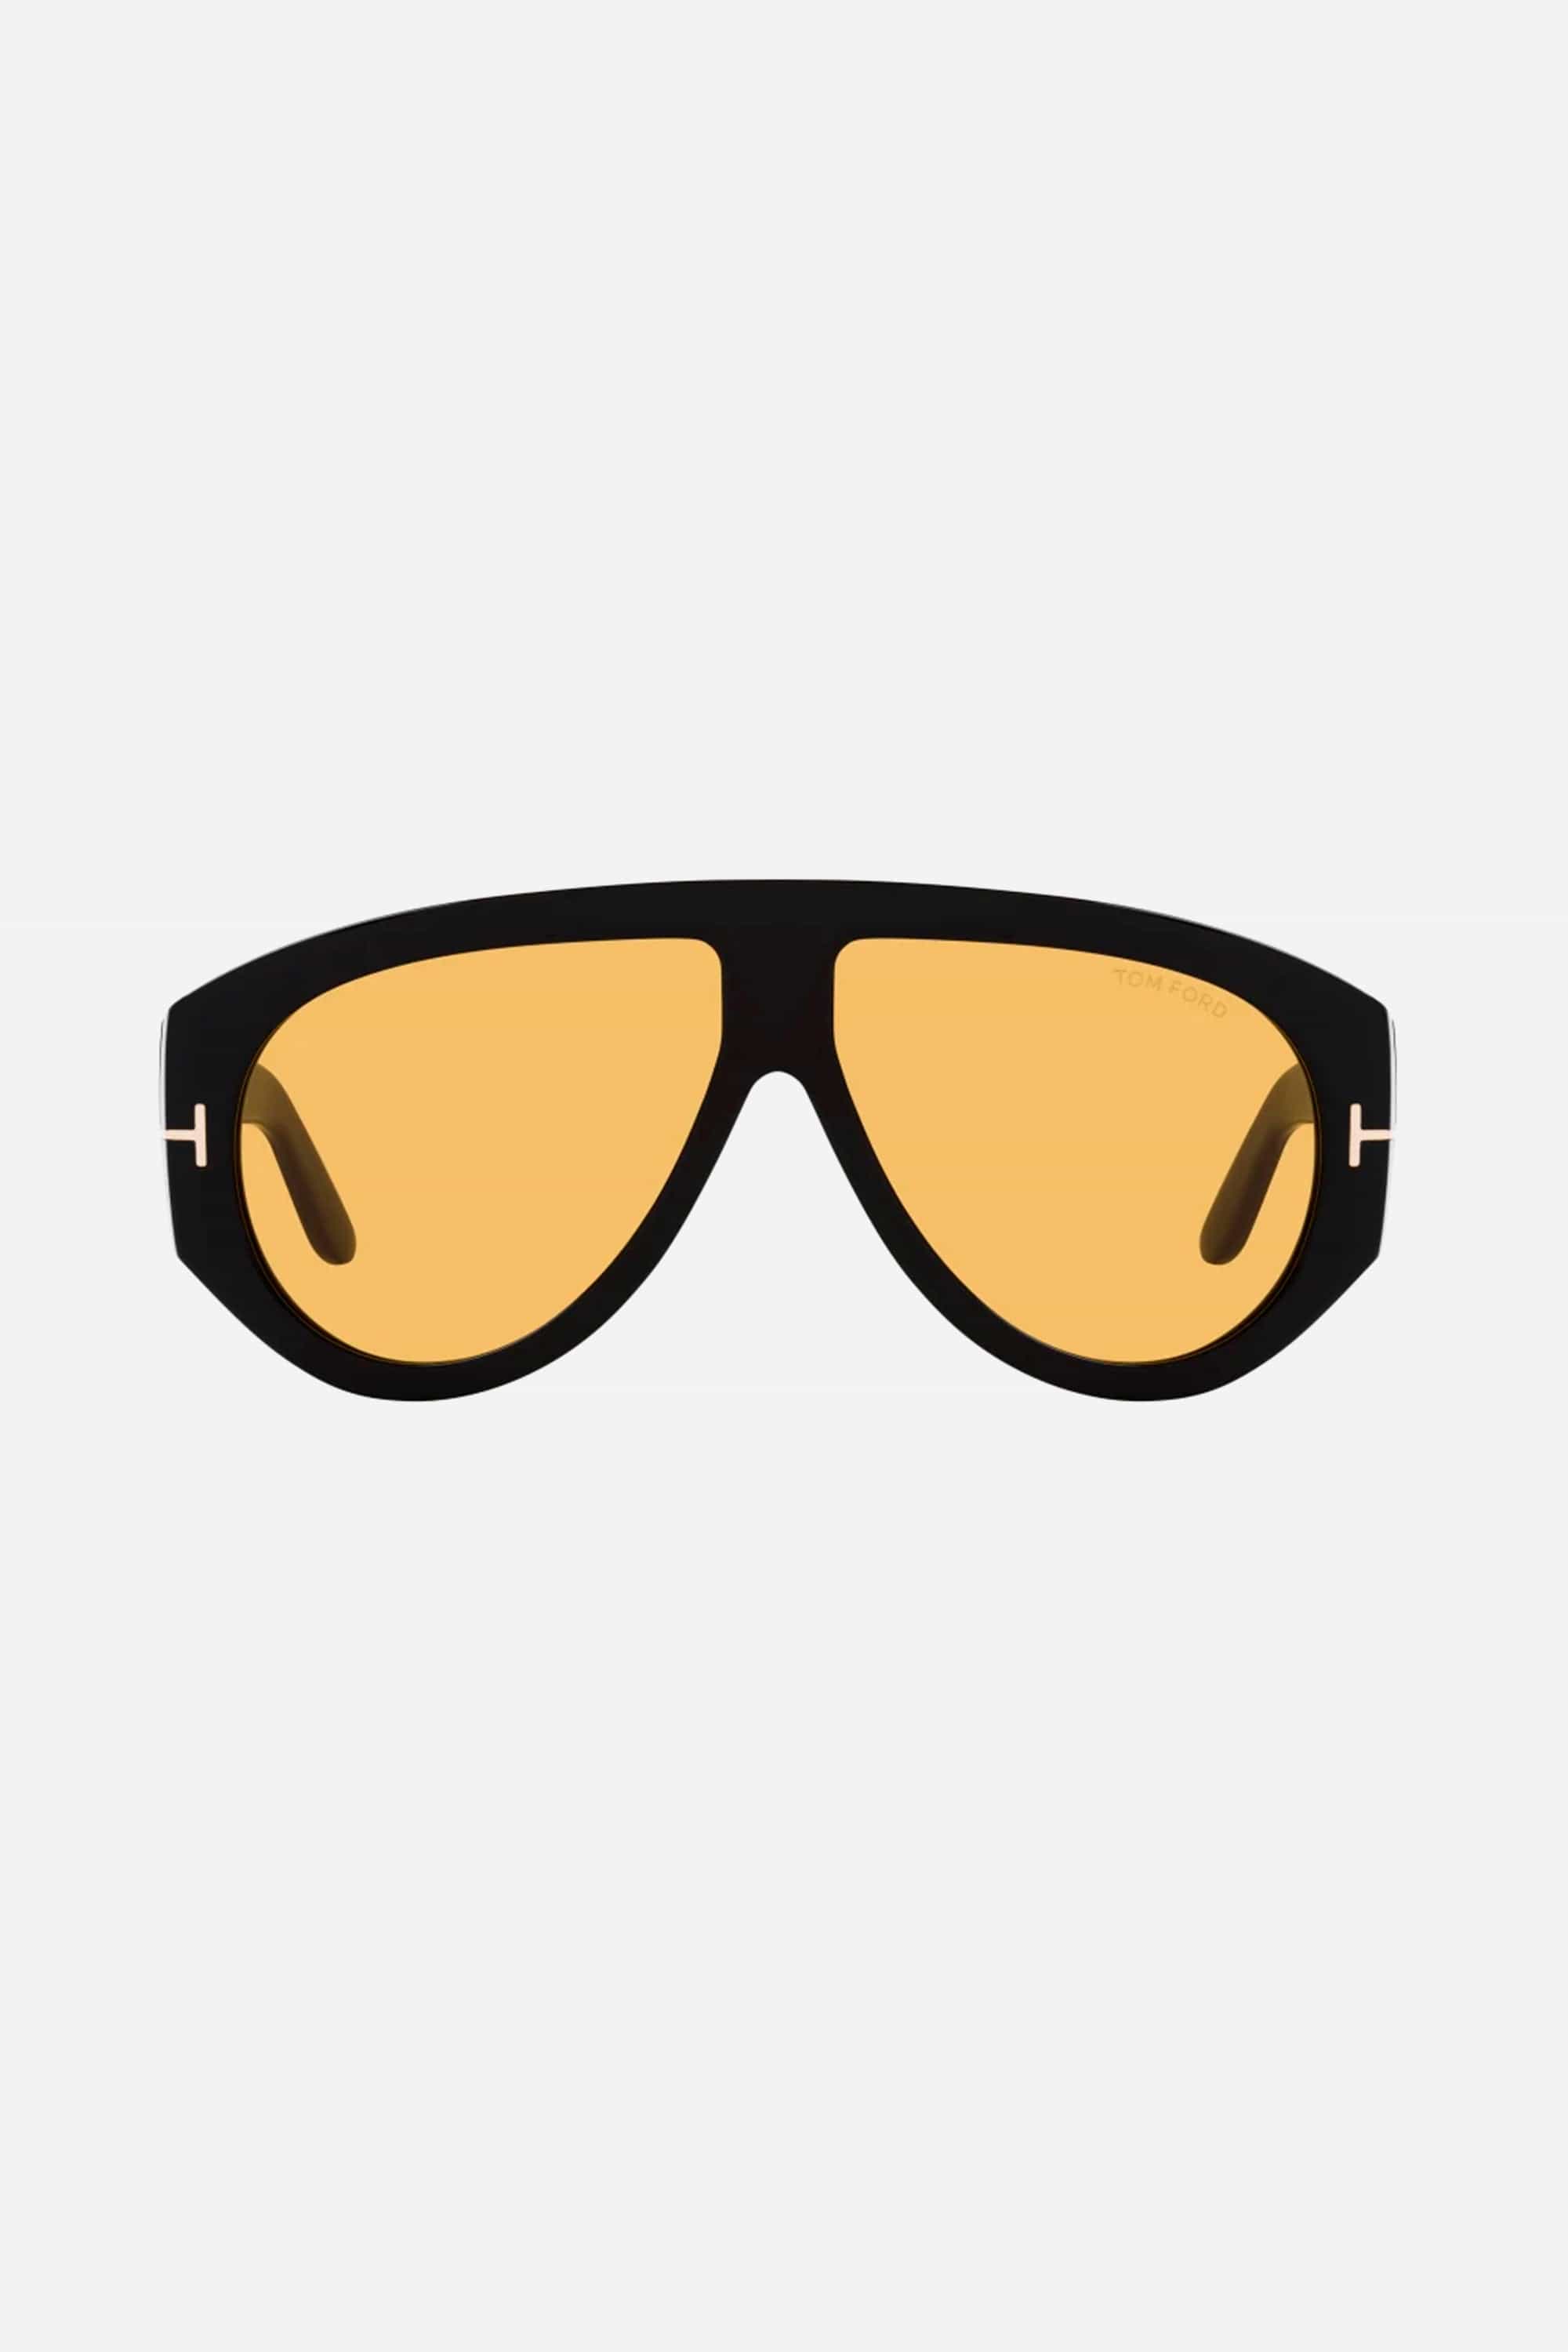 Tom Ford Bronson black and yellow pilot sunglasses - Eyewear Club